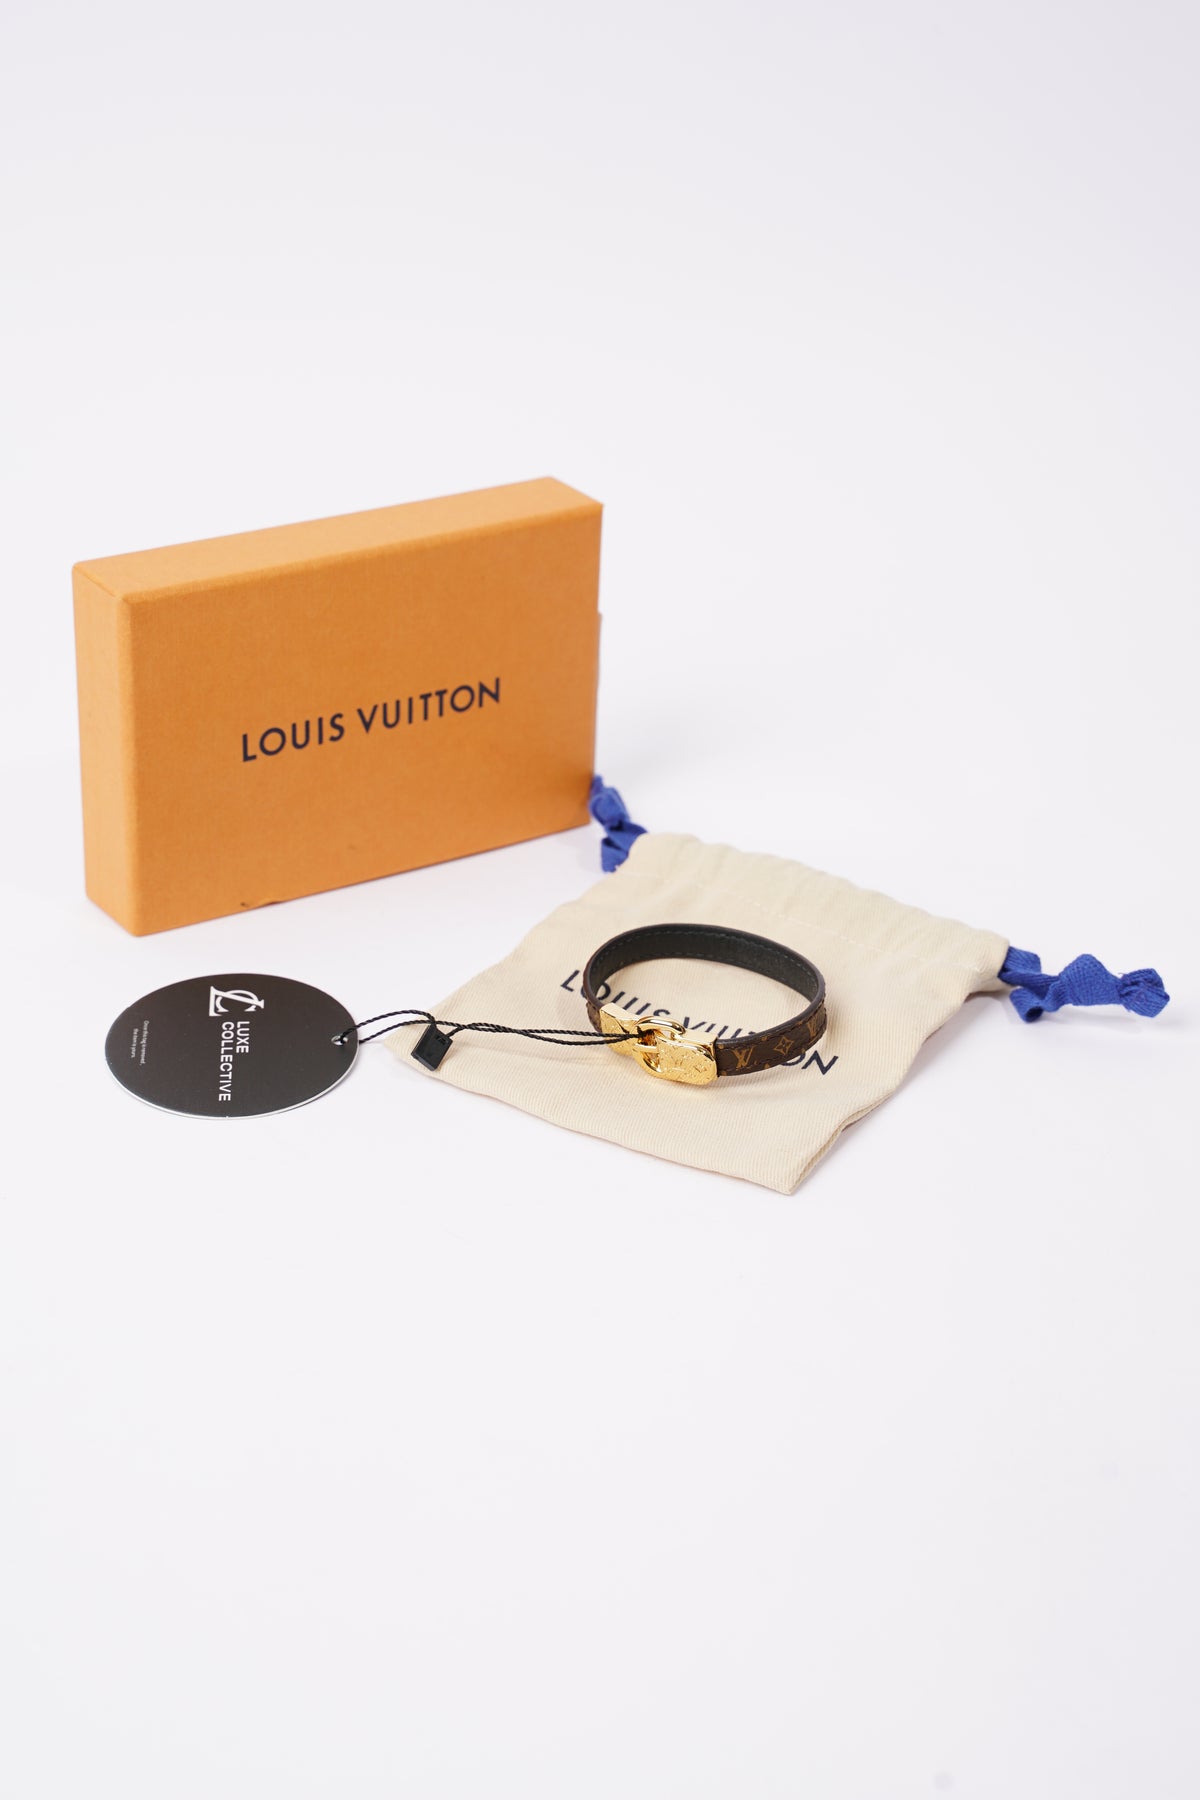 LOUIS VUITTON Monogram Fasten Your LV Bracelet 17 690098